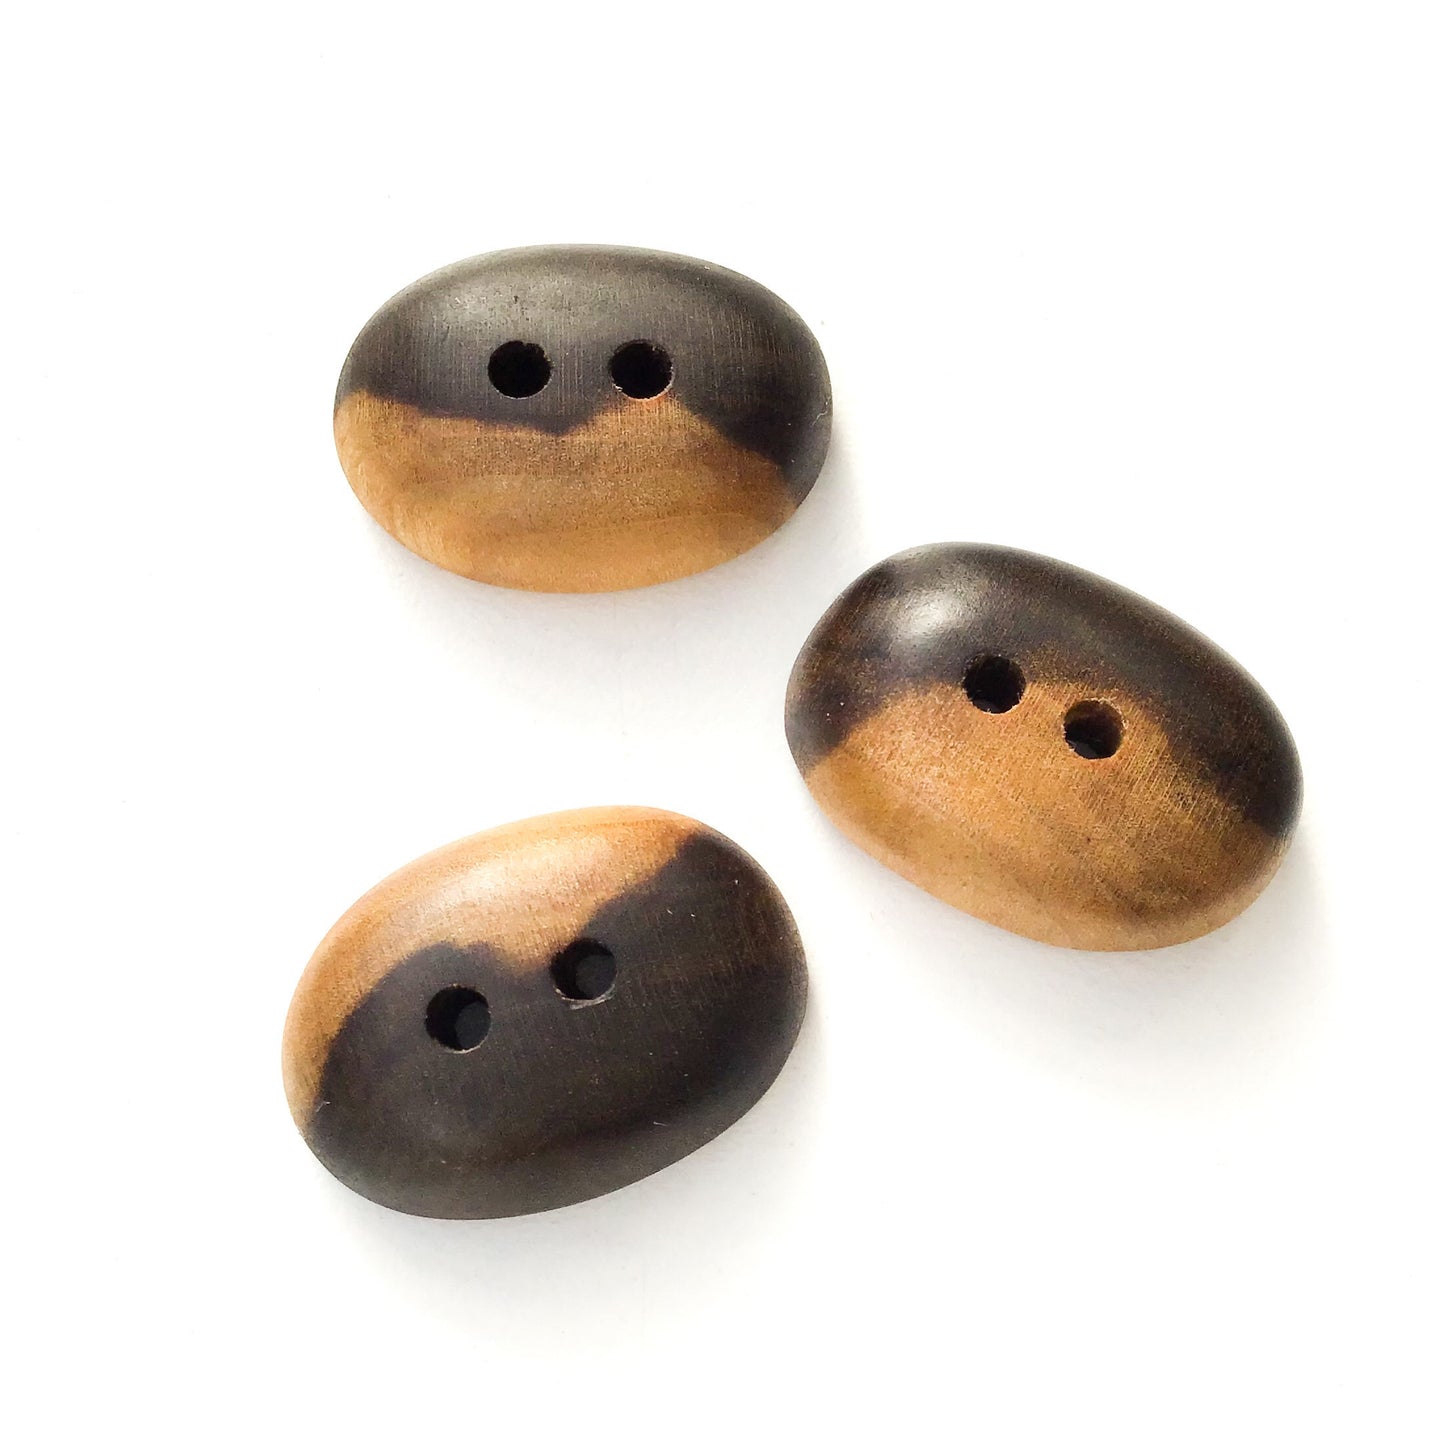 Black Walnut Wood Buttons - Oval Black Walnut Sap & Heartwood Buttons - 5/8" x 15/16" - 3 Pack